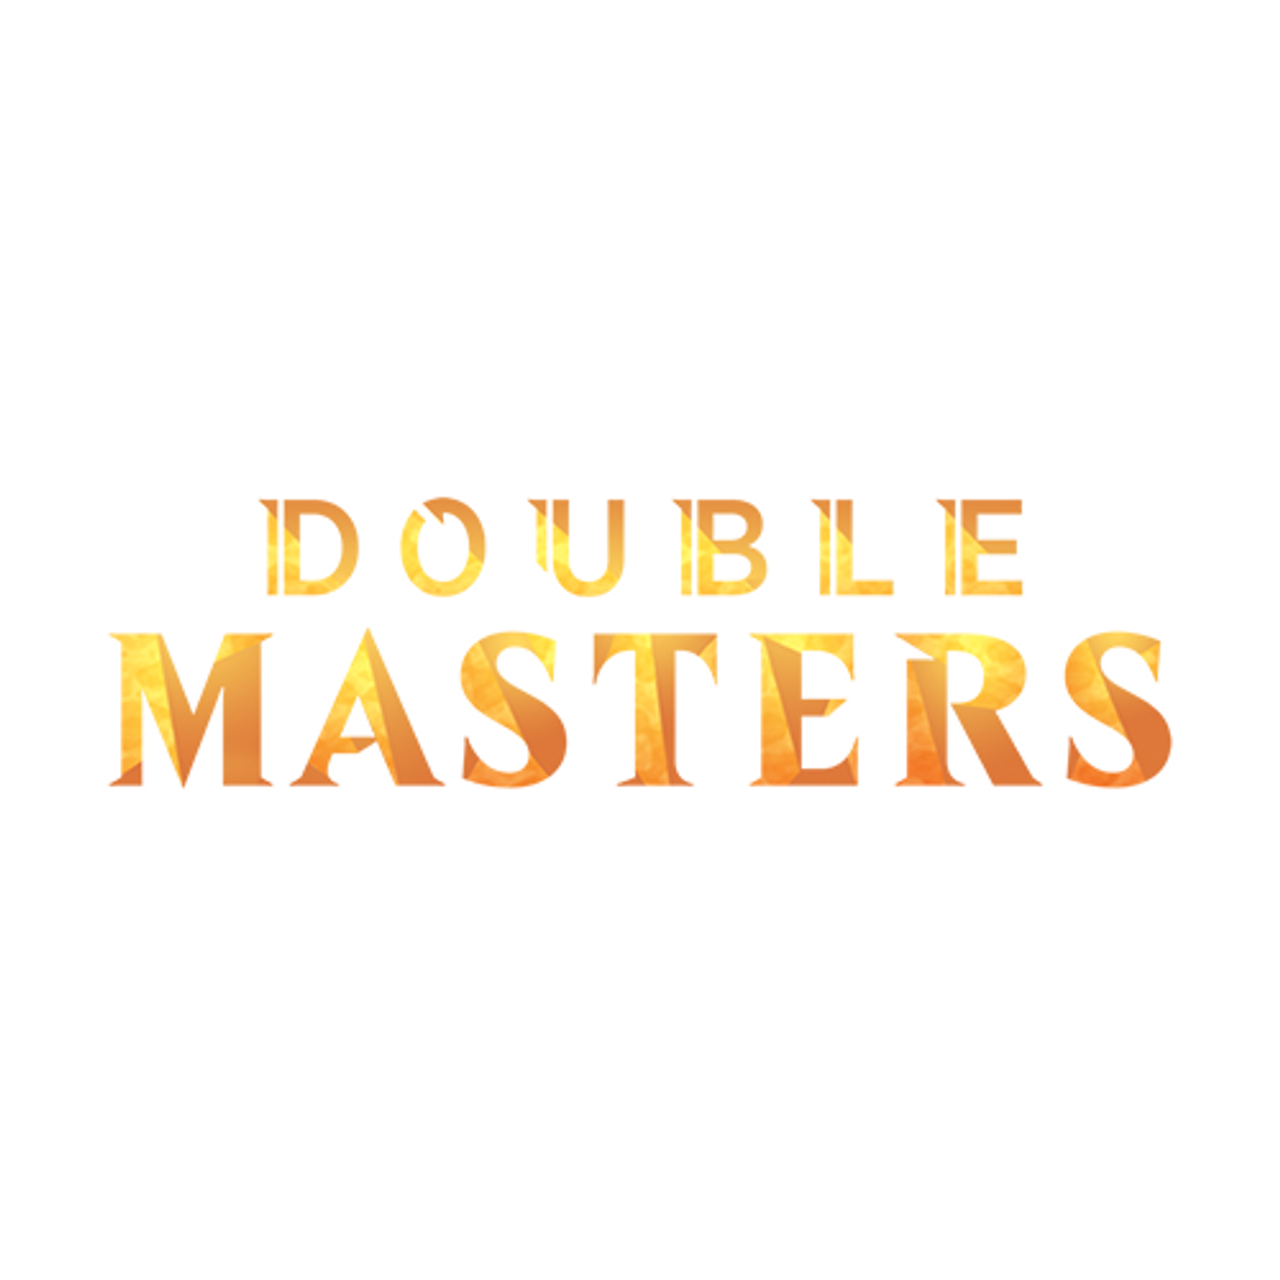 Double Master